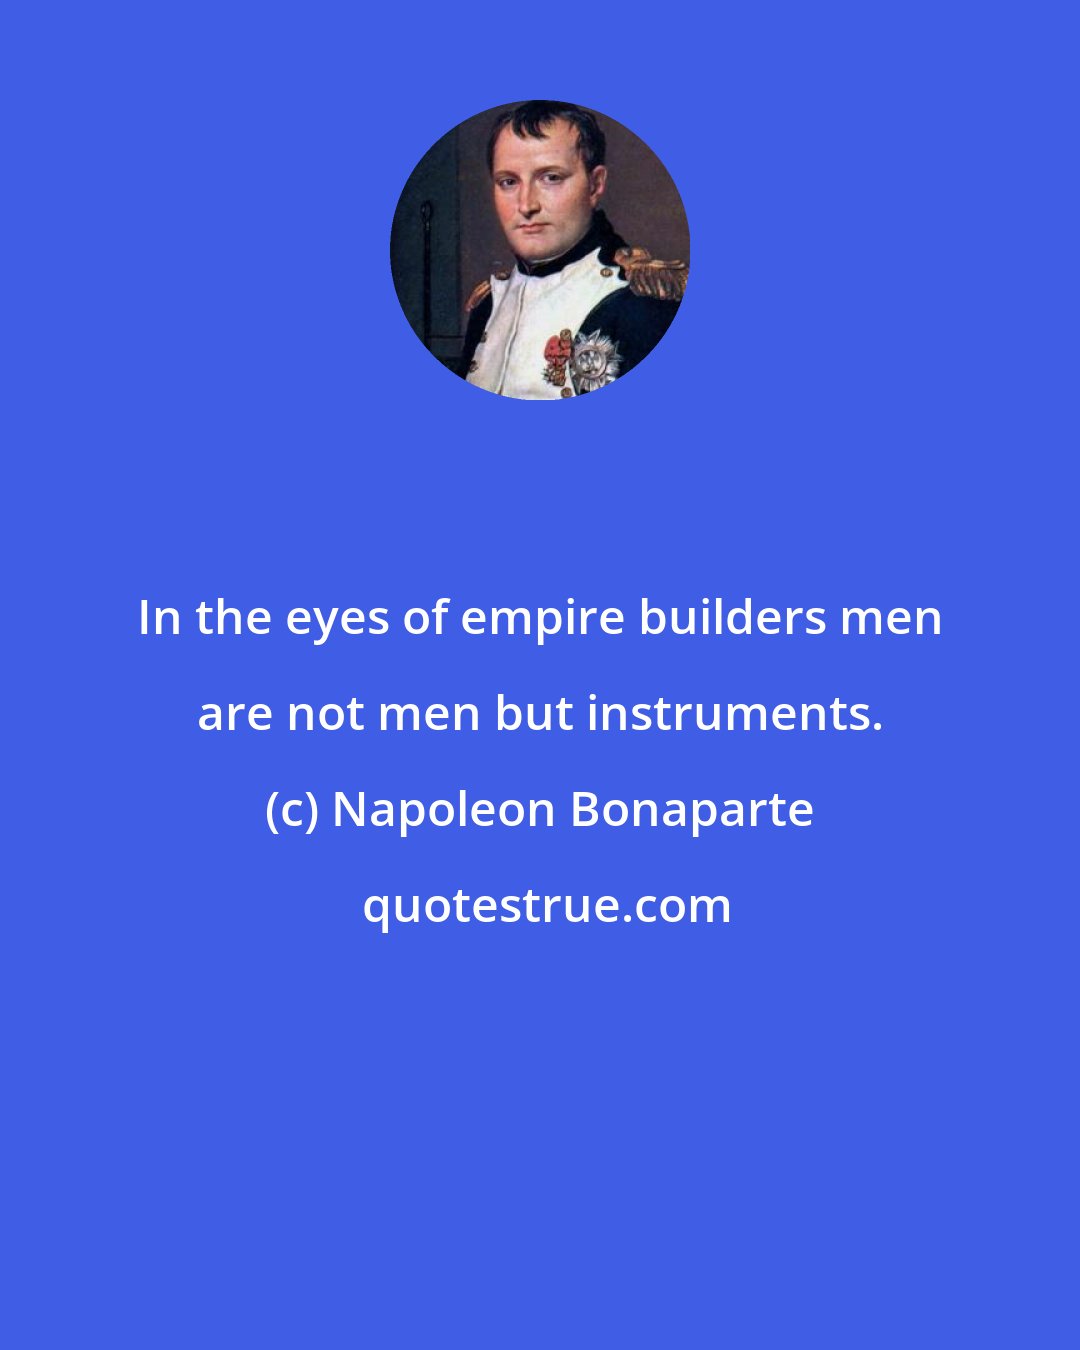 Napoleon Bonaparte: In the eyes of empire builders men are not men but instruments.